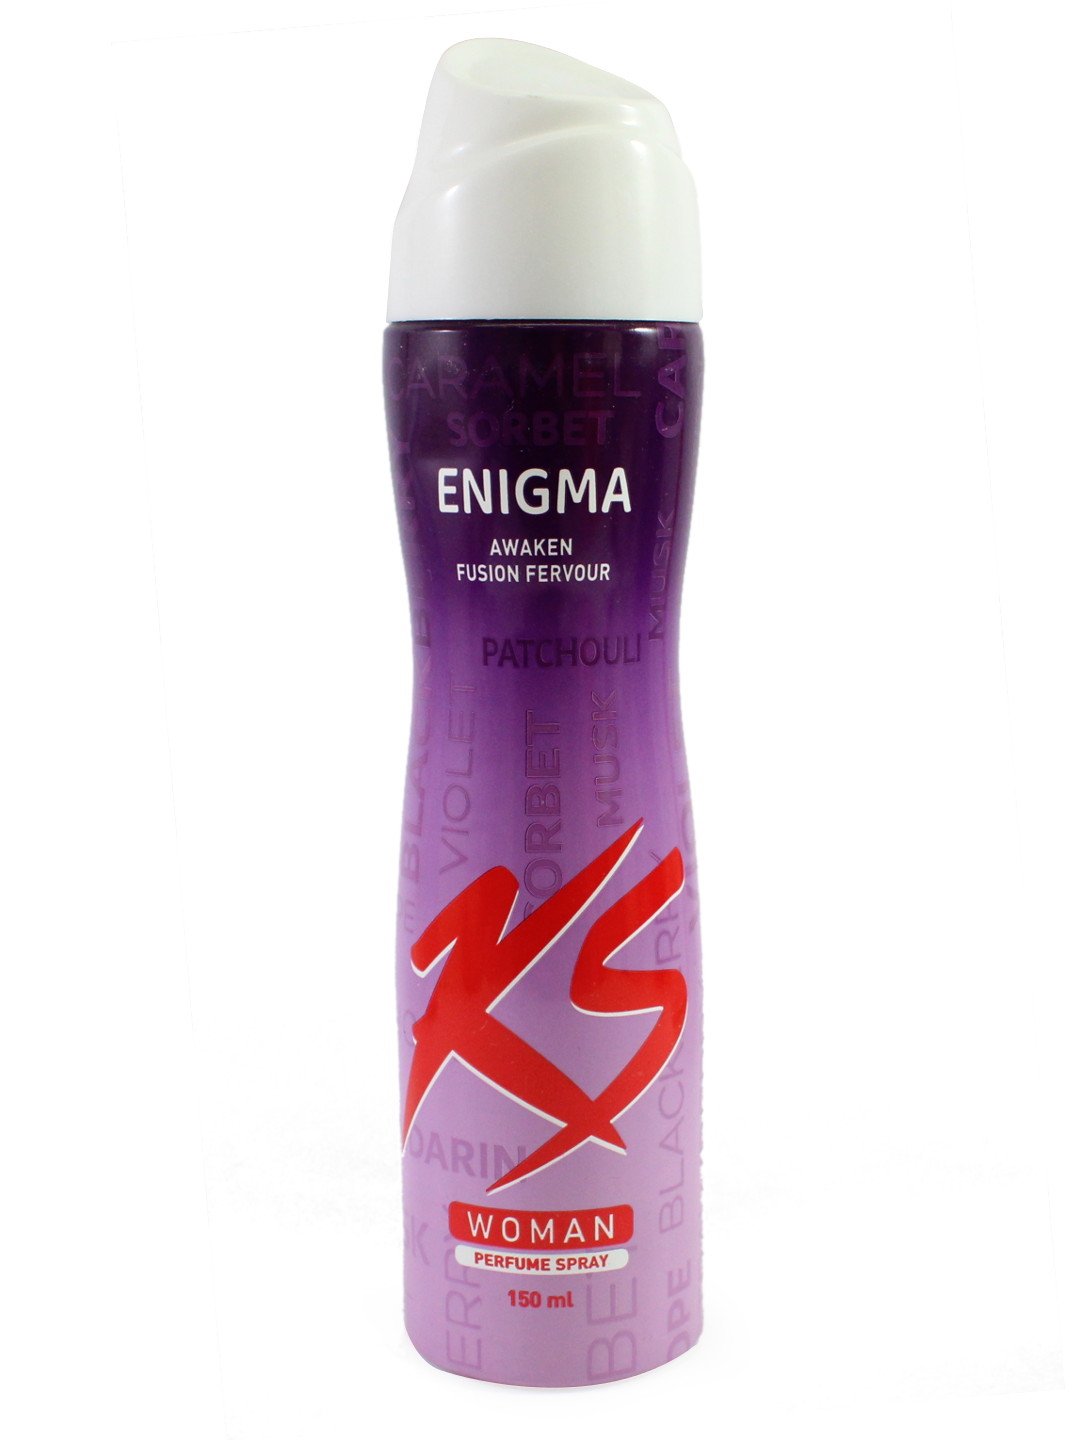 KS Enigma Awaken Fusion Fervour Patchouli Woman Perfume Spray 150 ml